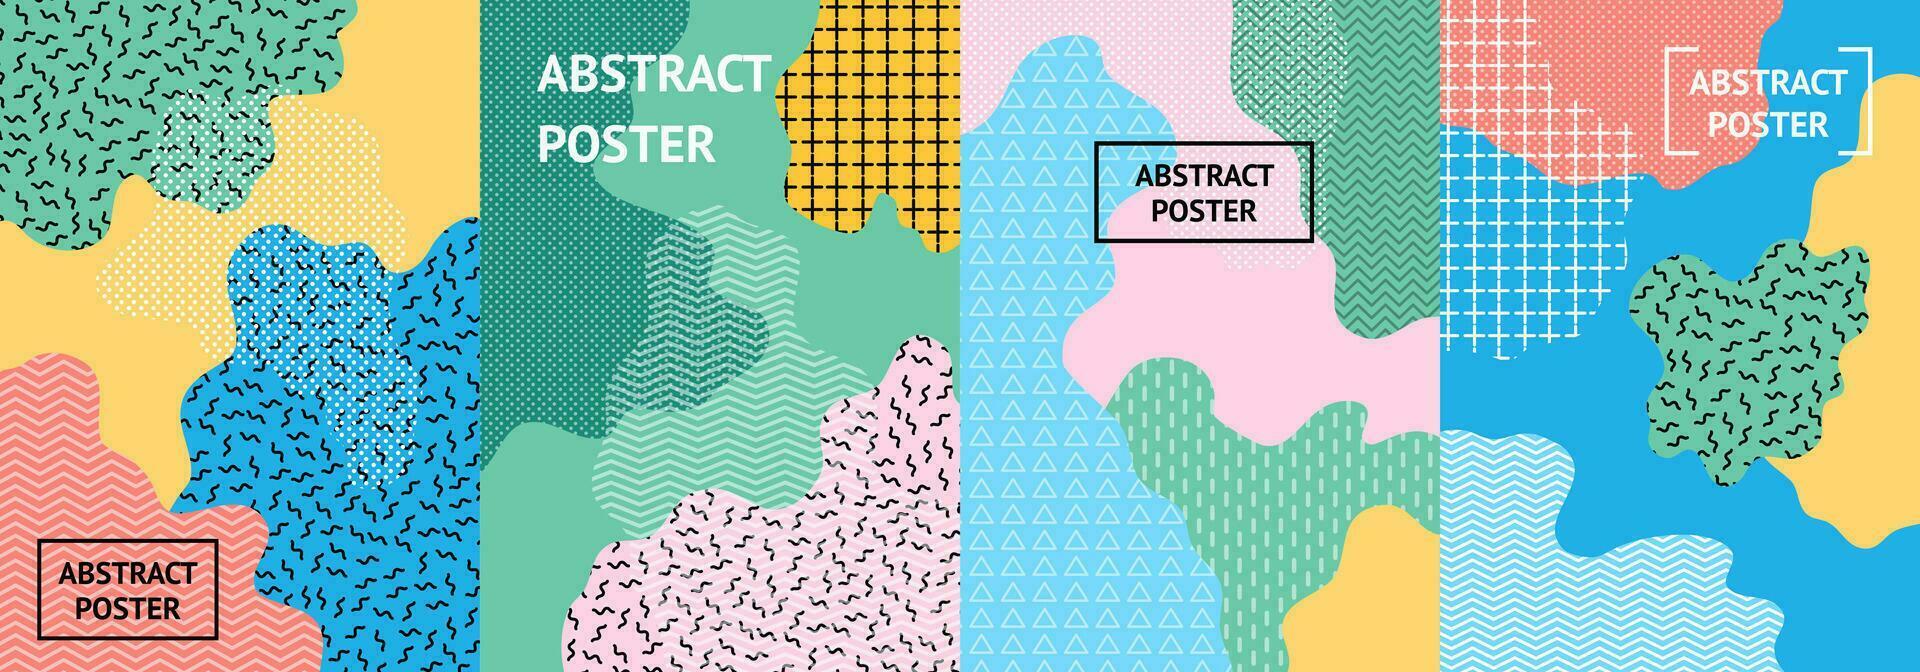 Farbe abstrakt Formen Konzept Vorlage Poster Flyer Banner Karte. Vektor